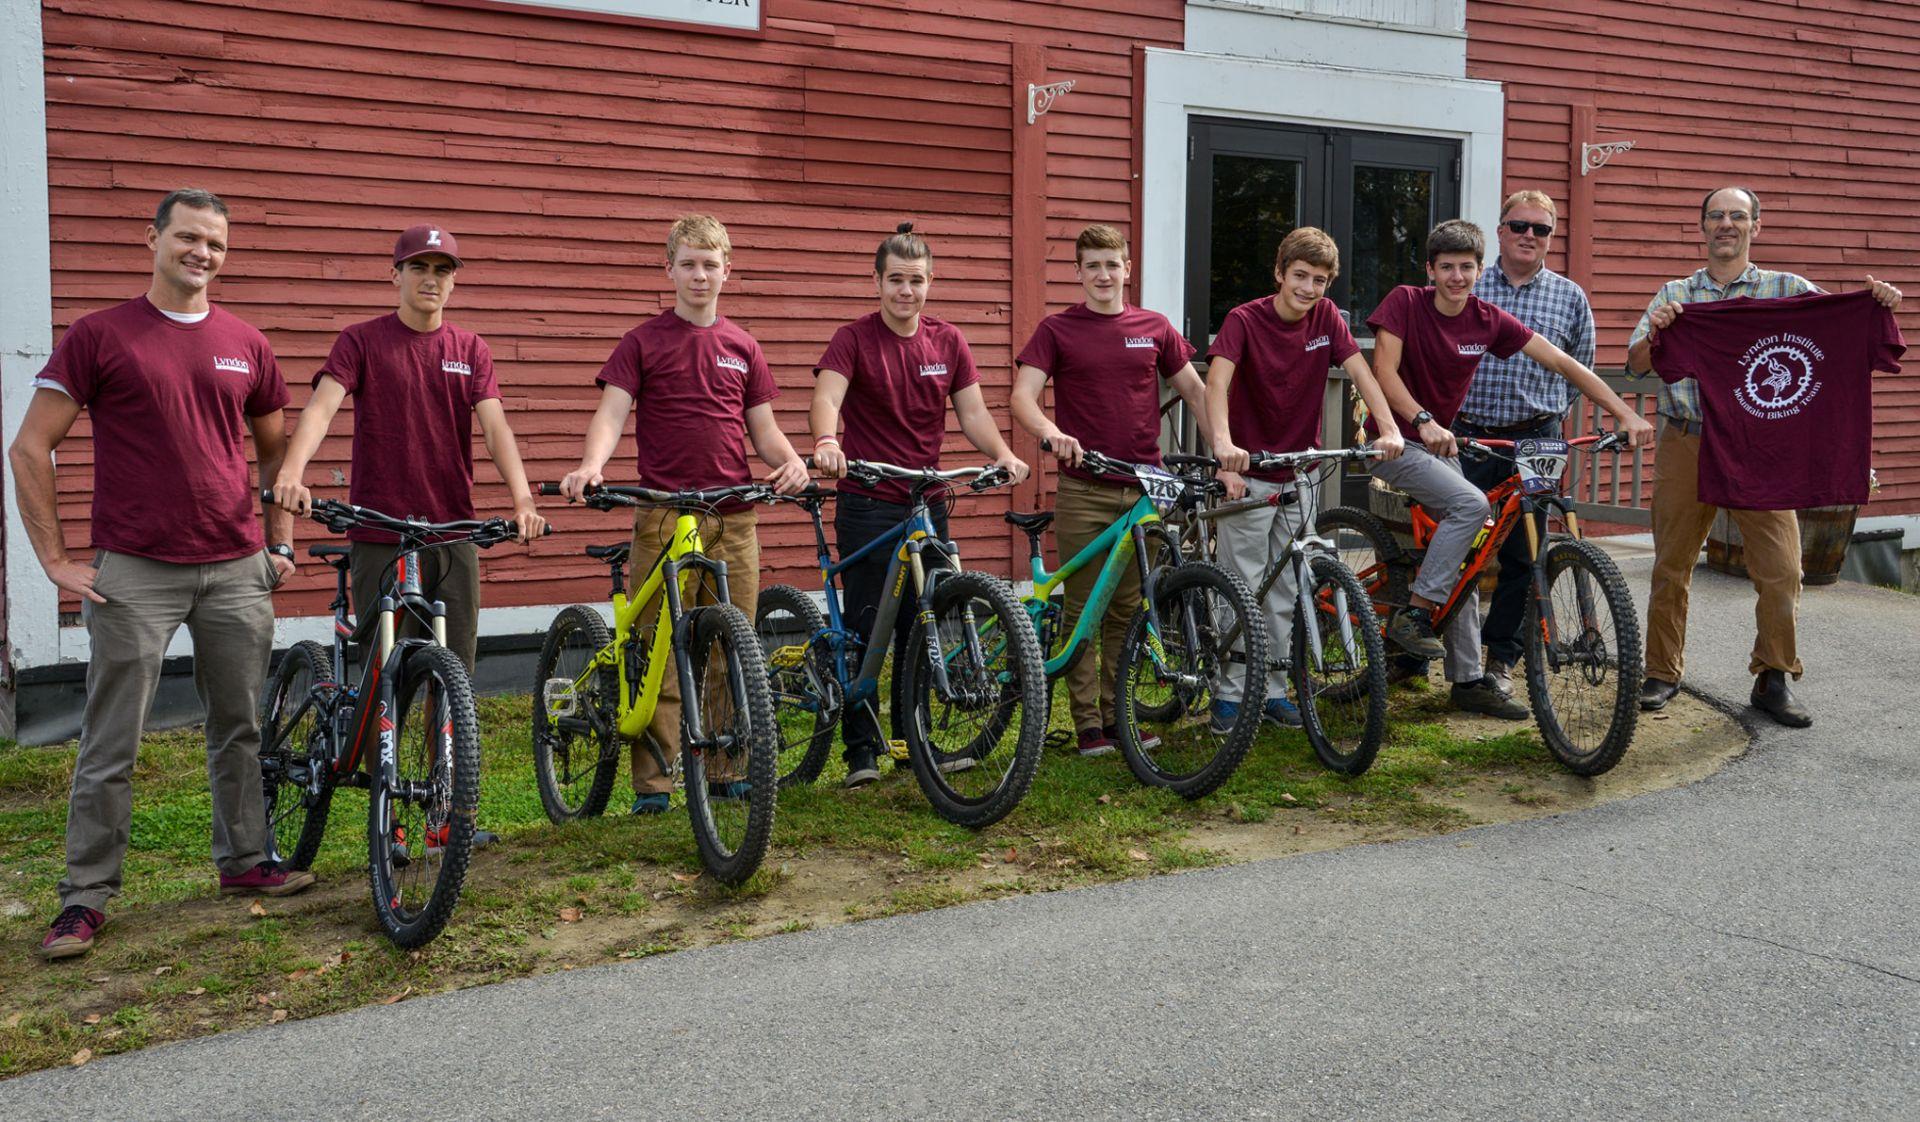 Group photo of the mountain bike team. 